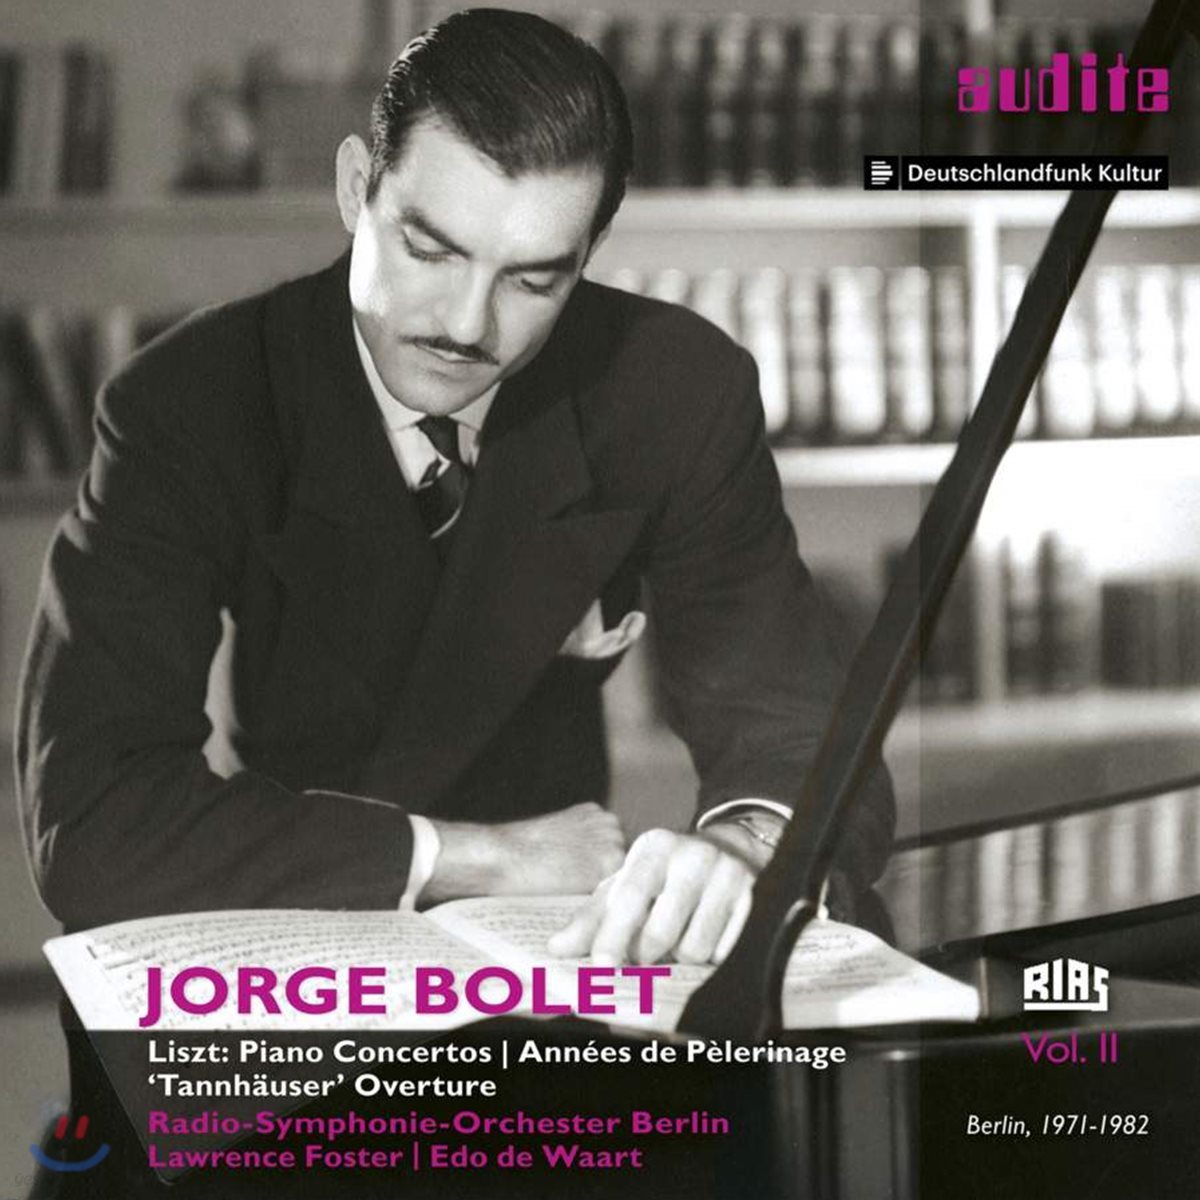 Jorge Bolet 호르헤 볼레 - RIAS 레코딩 2집: 리스트 (RIAS Recording Vol.2)